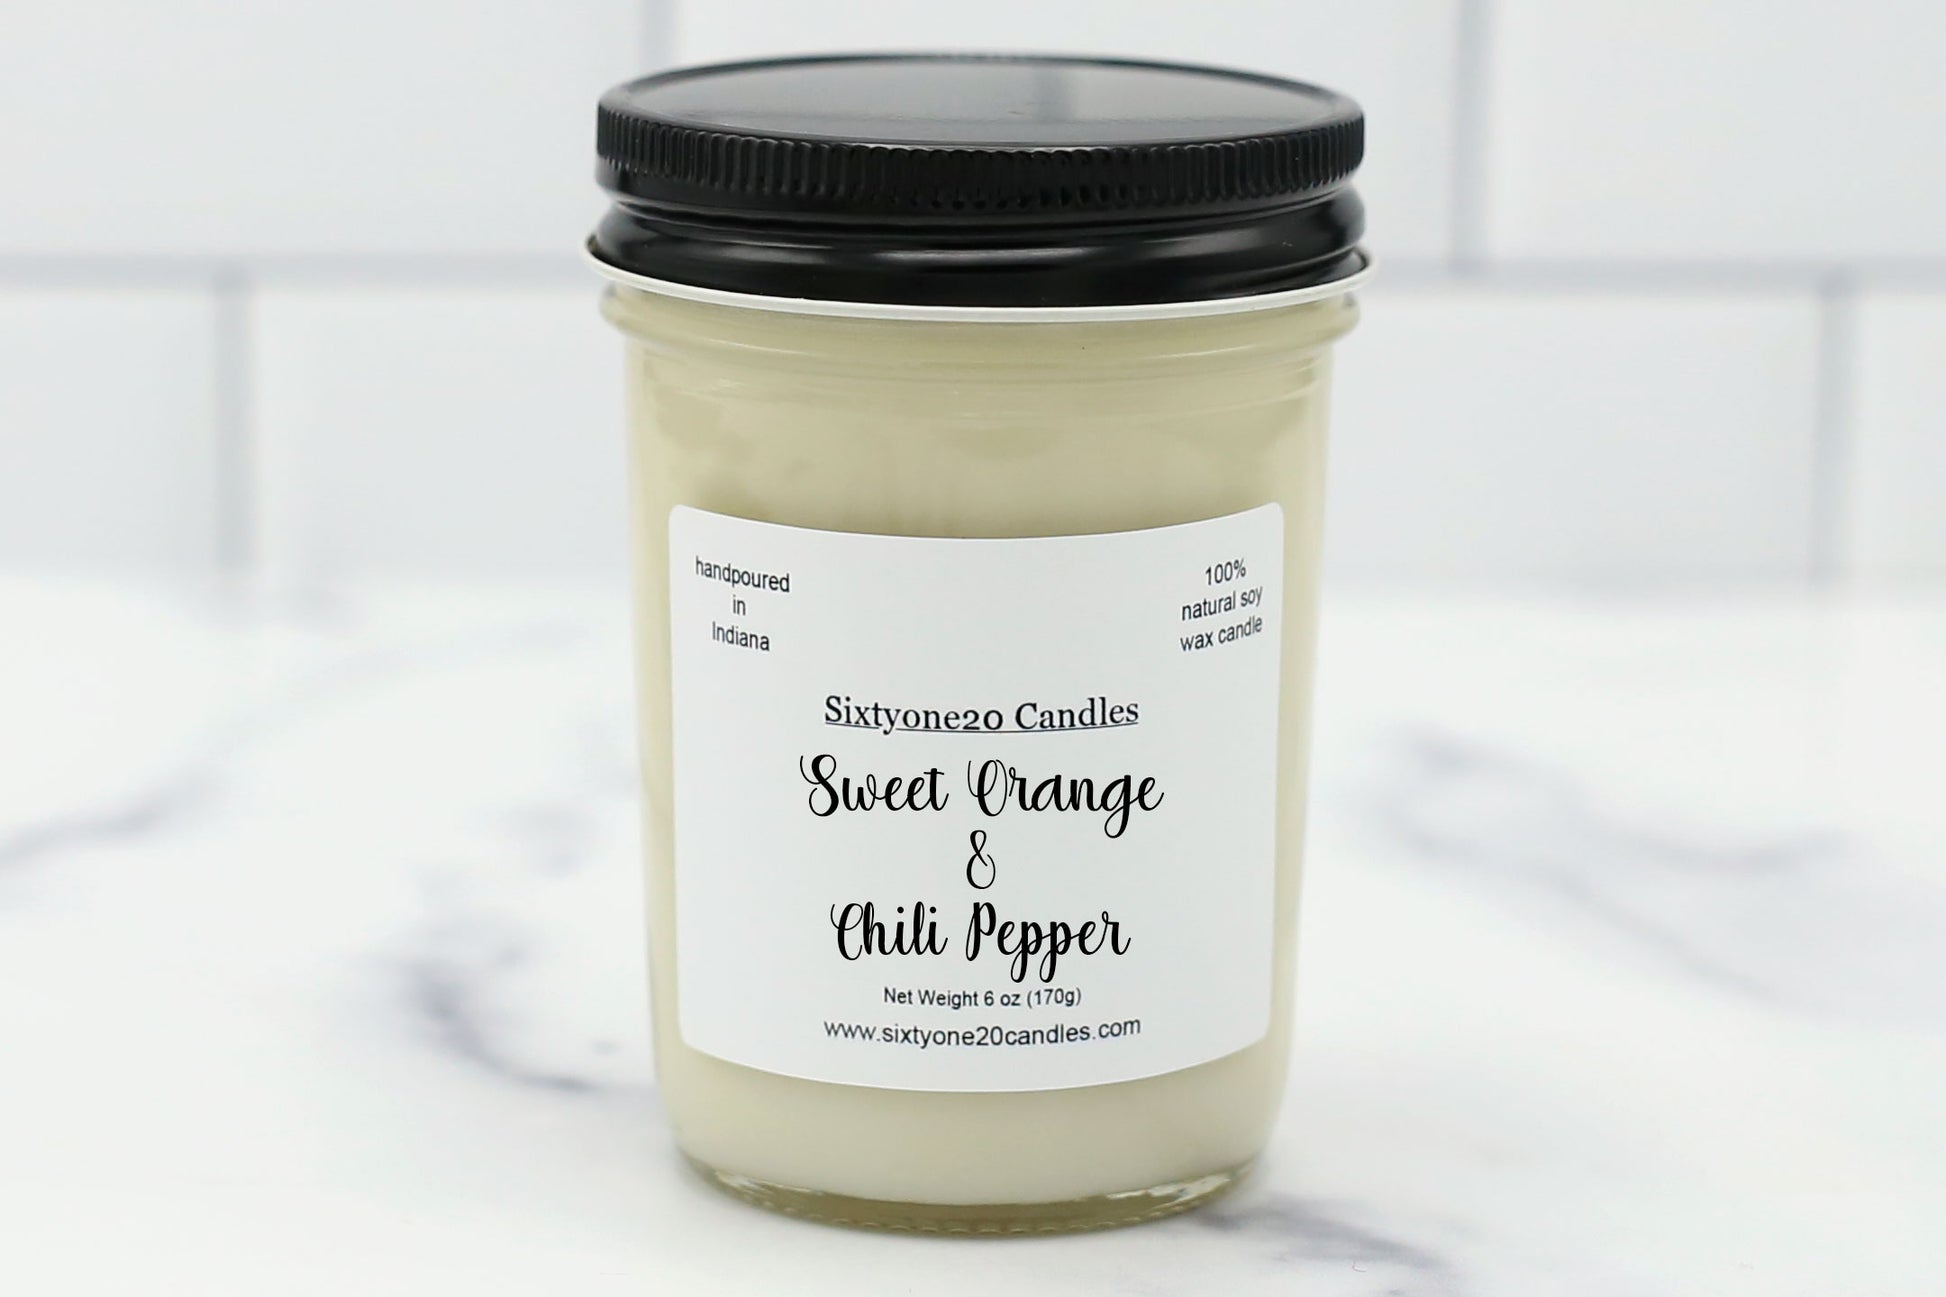 Sweet Orange & Chili Pepper 100% soy wax candle